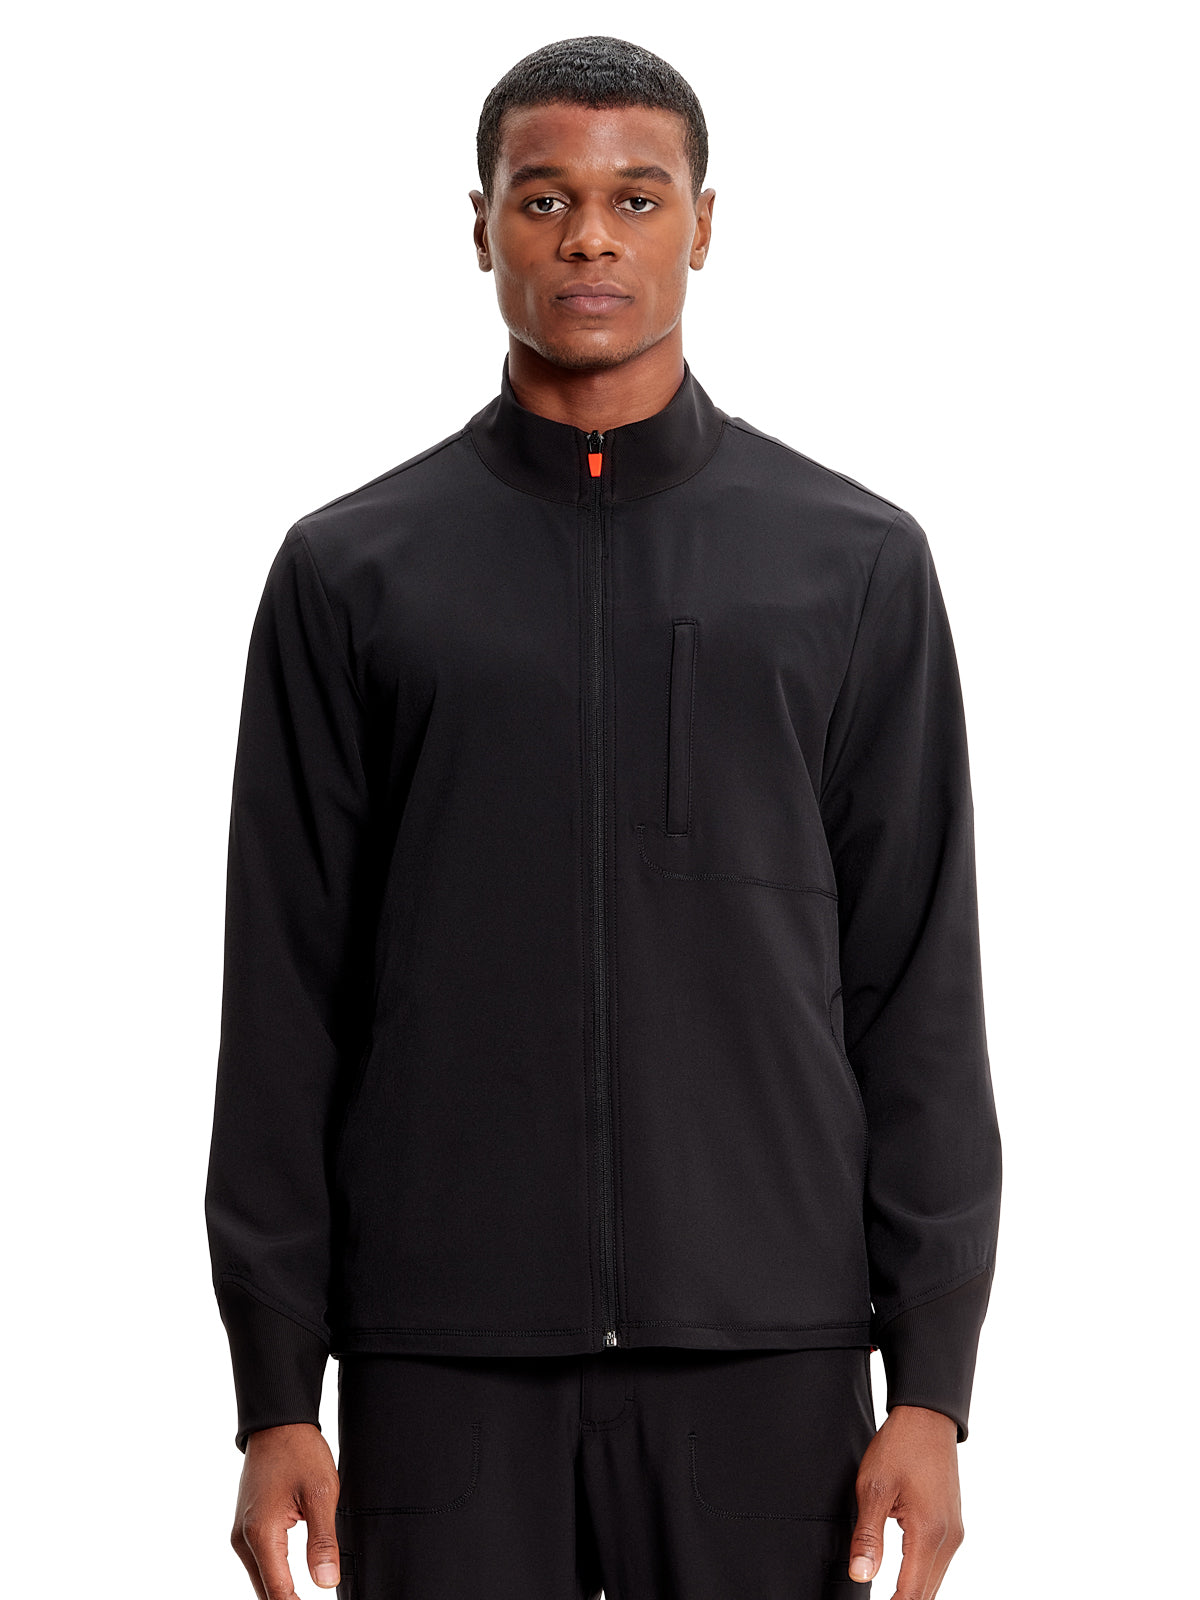 Men's Zip Front Scrub Jacket - IN350A - Black